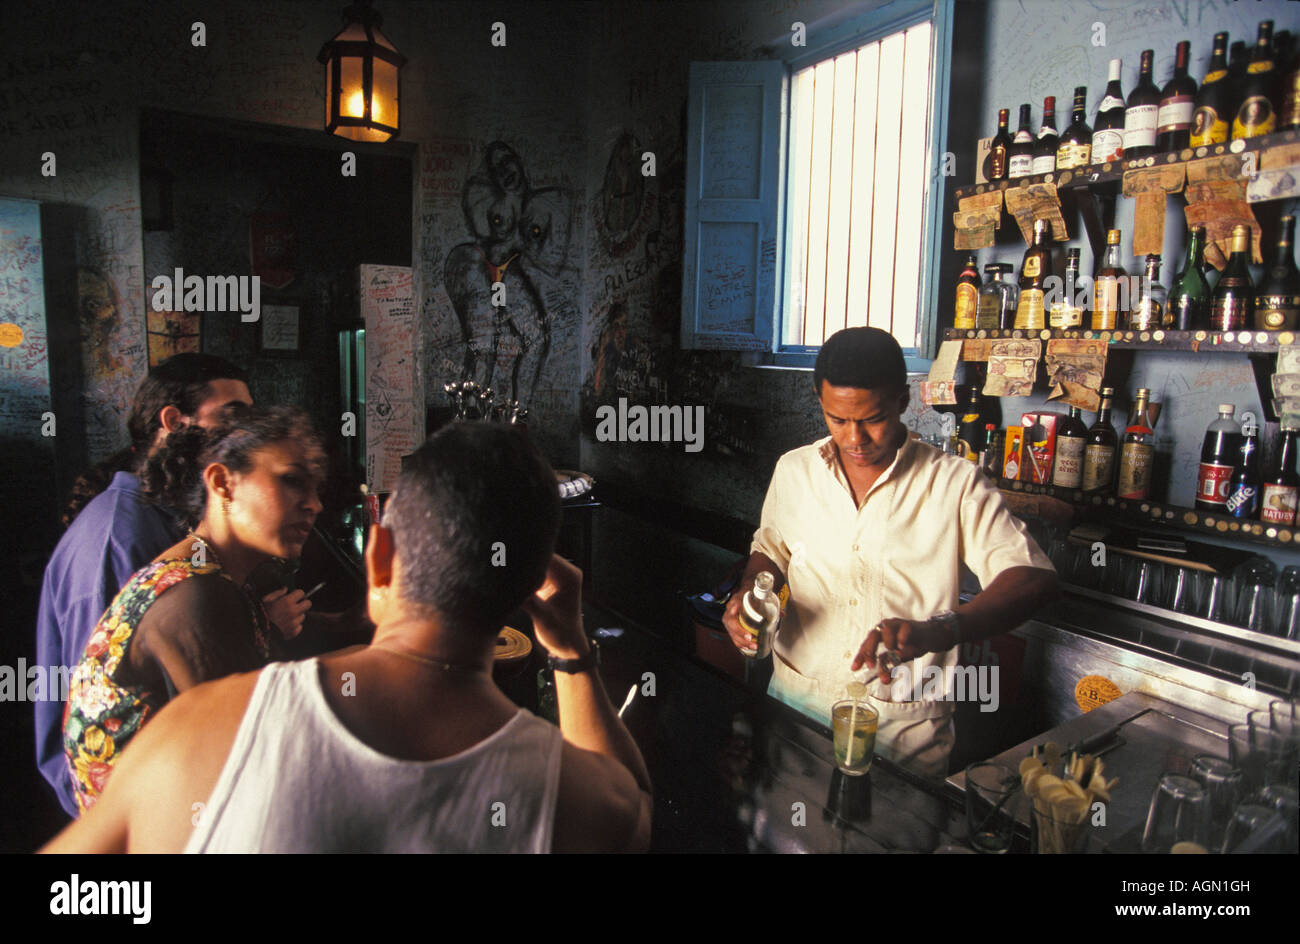 Cuba Havana People sitting at pub Stock Photo